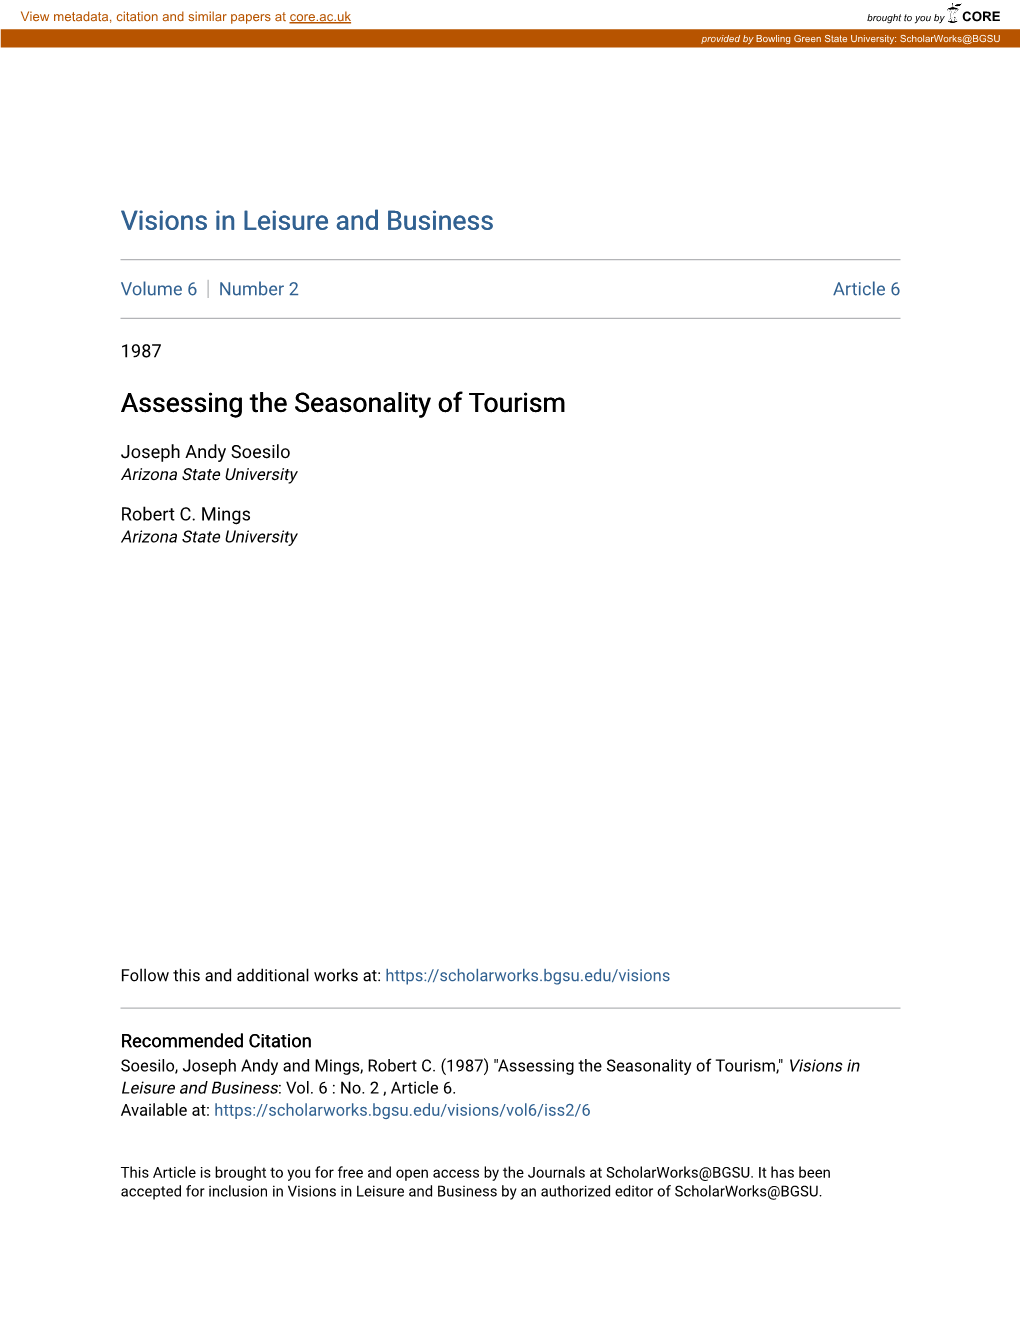 Assessing the Seasonality of Tourism